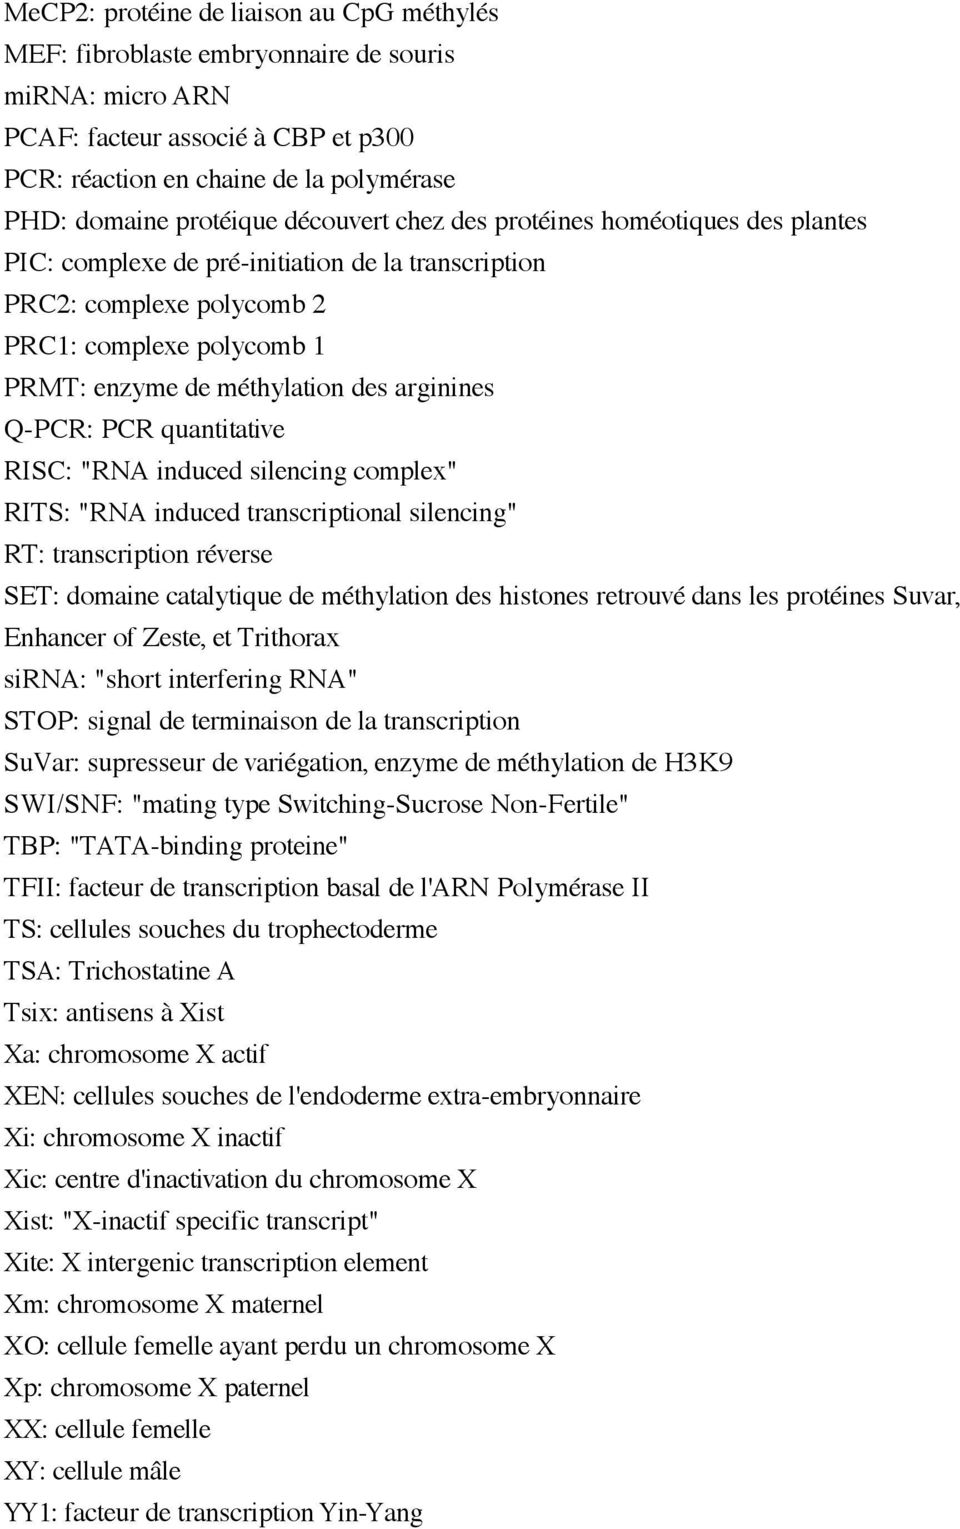 Q-PCR: PCR quantitative RISC: "RNA induced silencing complex" RITS: "RNA induced transcriptional silencing" RT: transcription réverse SET: domaine catalytique de méthylation des histones retrouvé